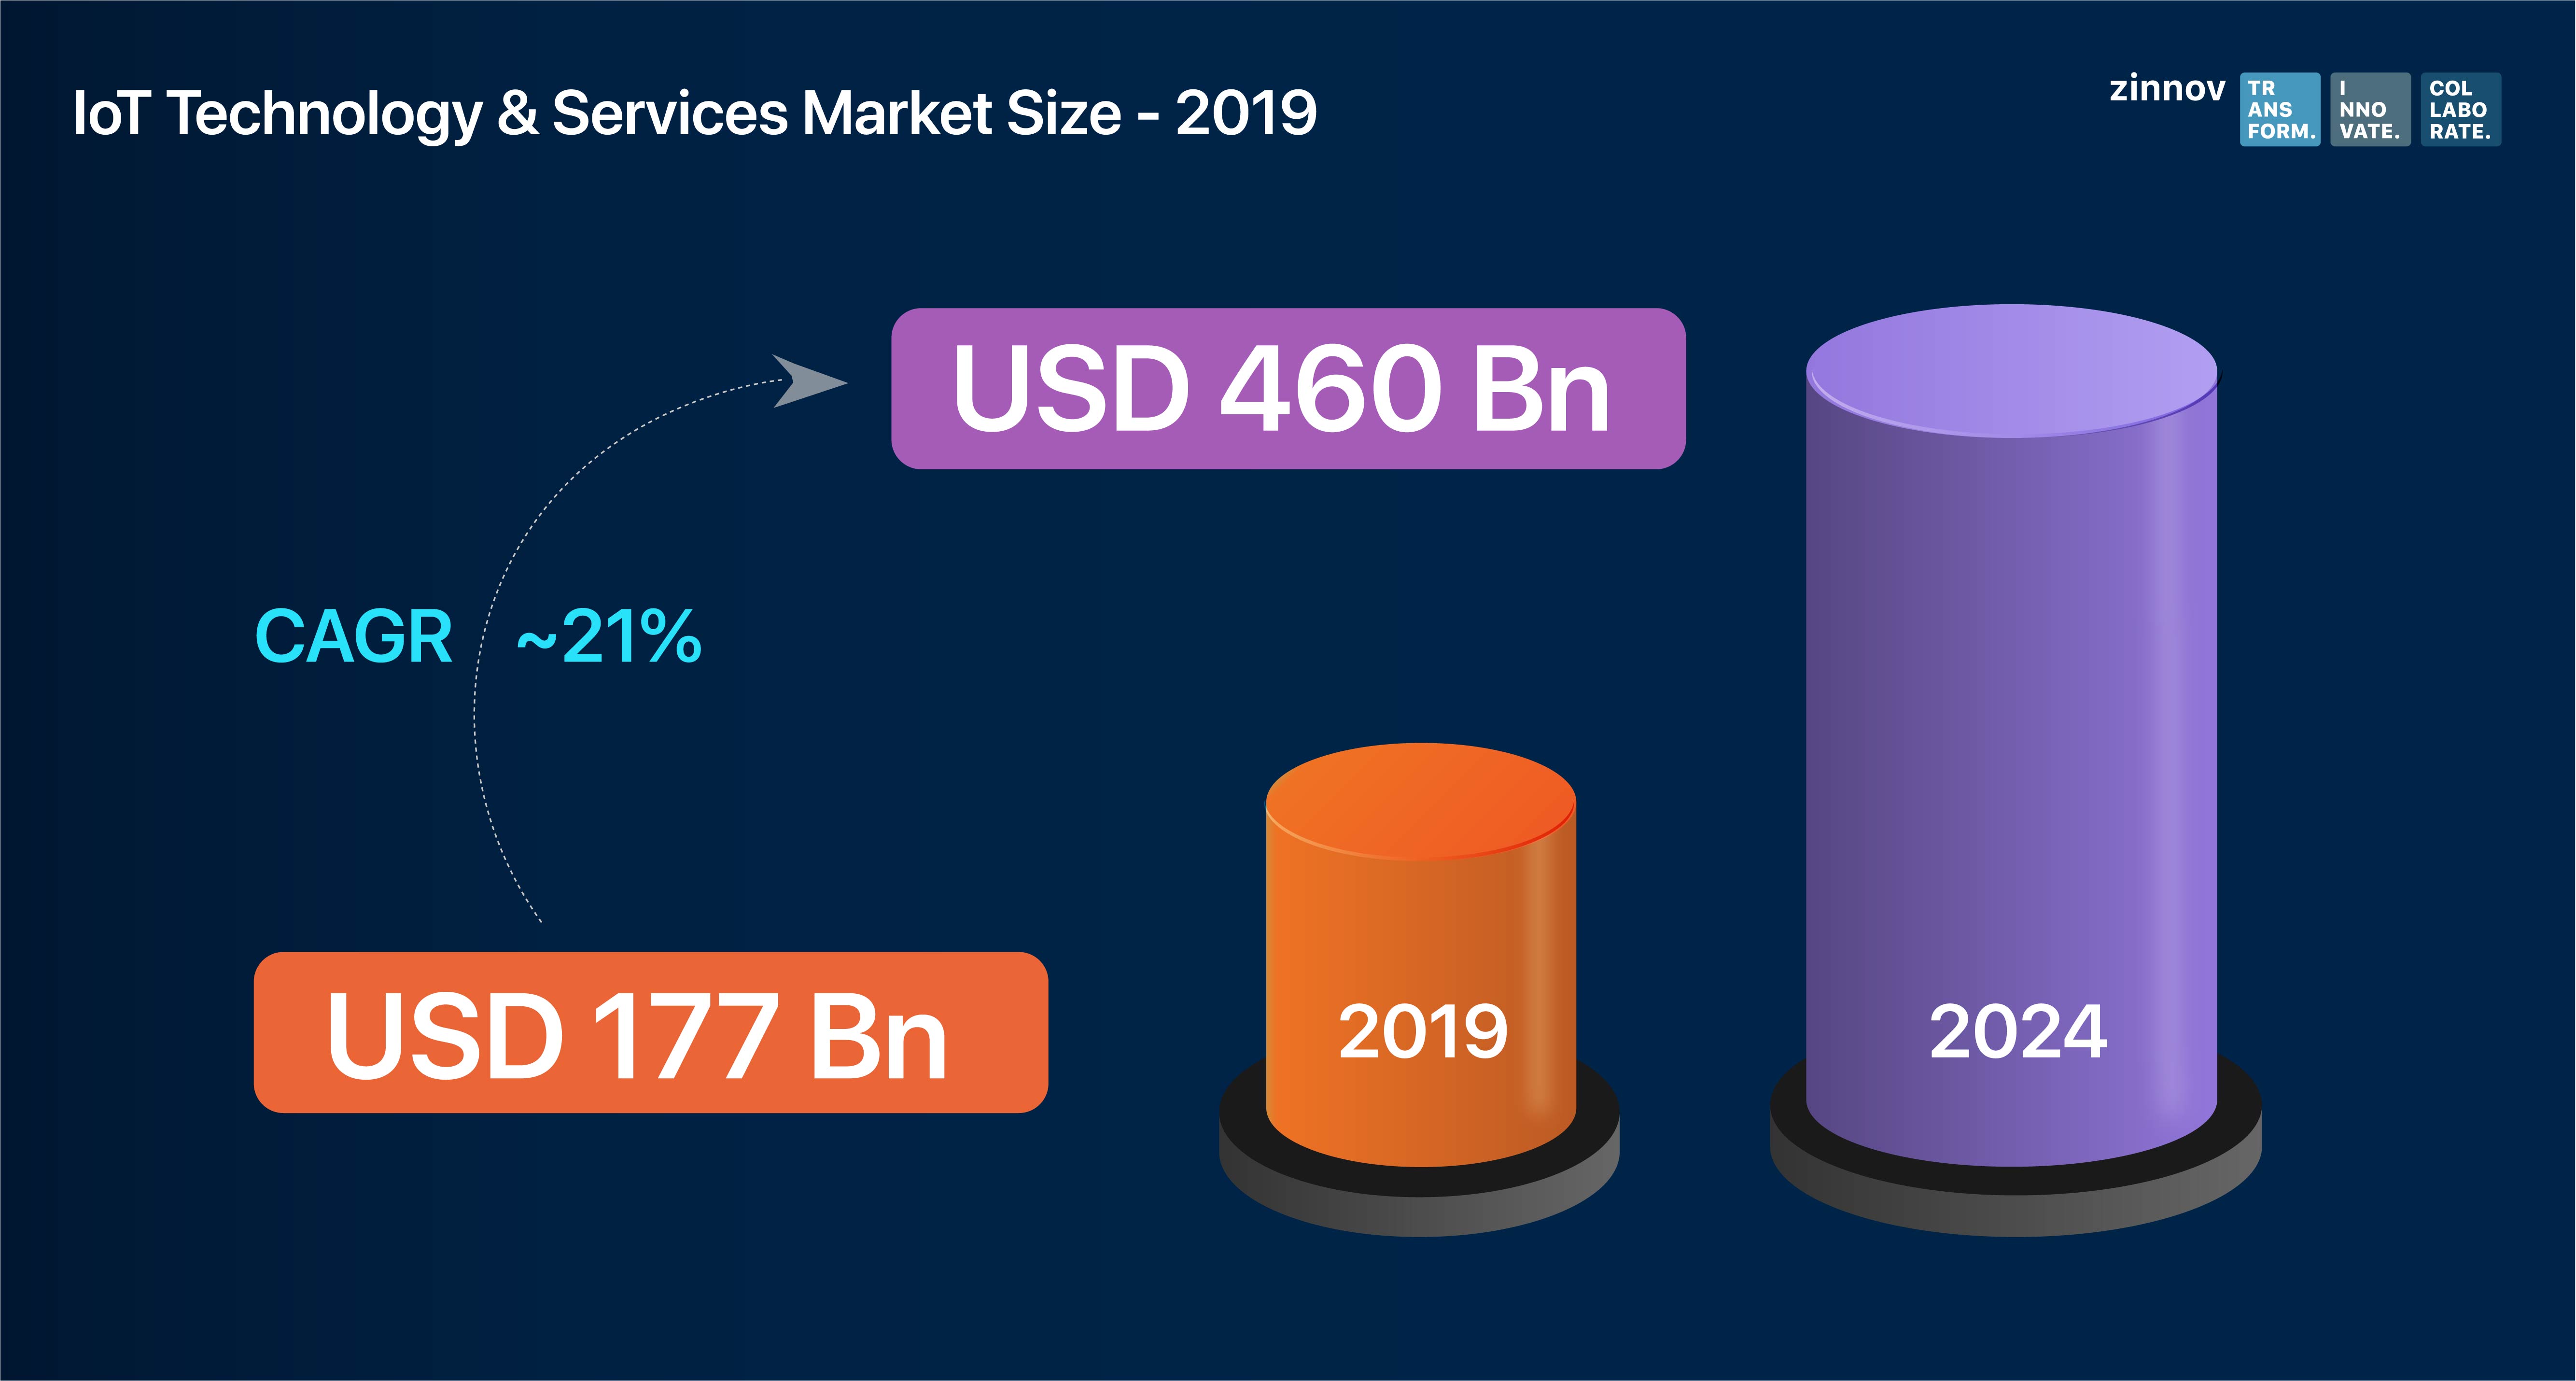 IoT Technology & Services Market Size